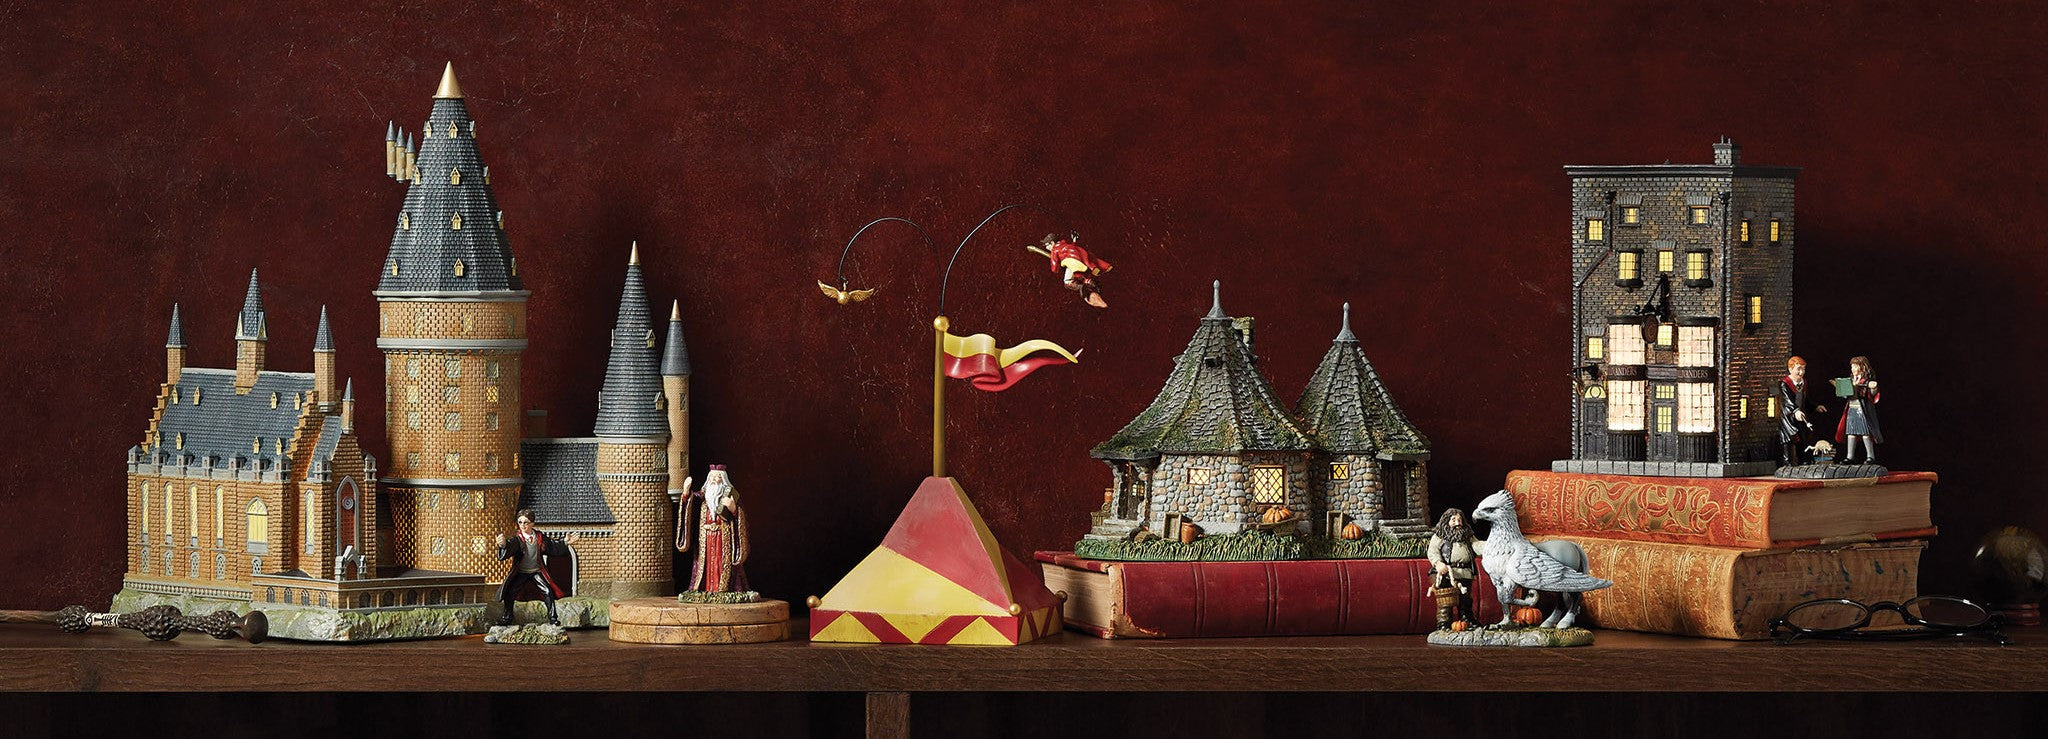 Department 56 Harry Potter Village: Quality Quidditch Supplies